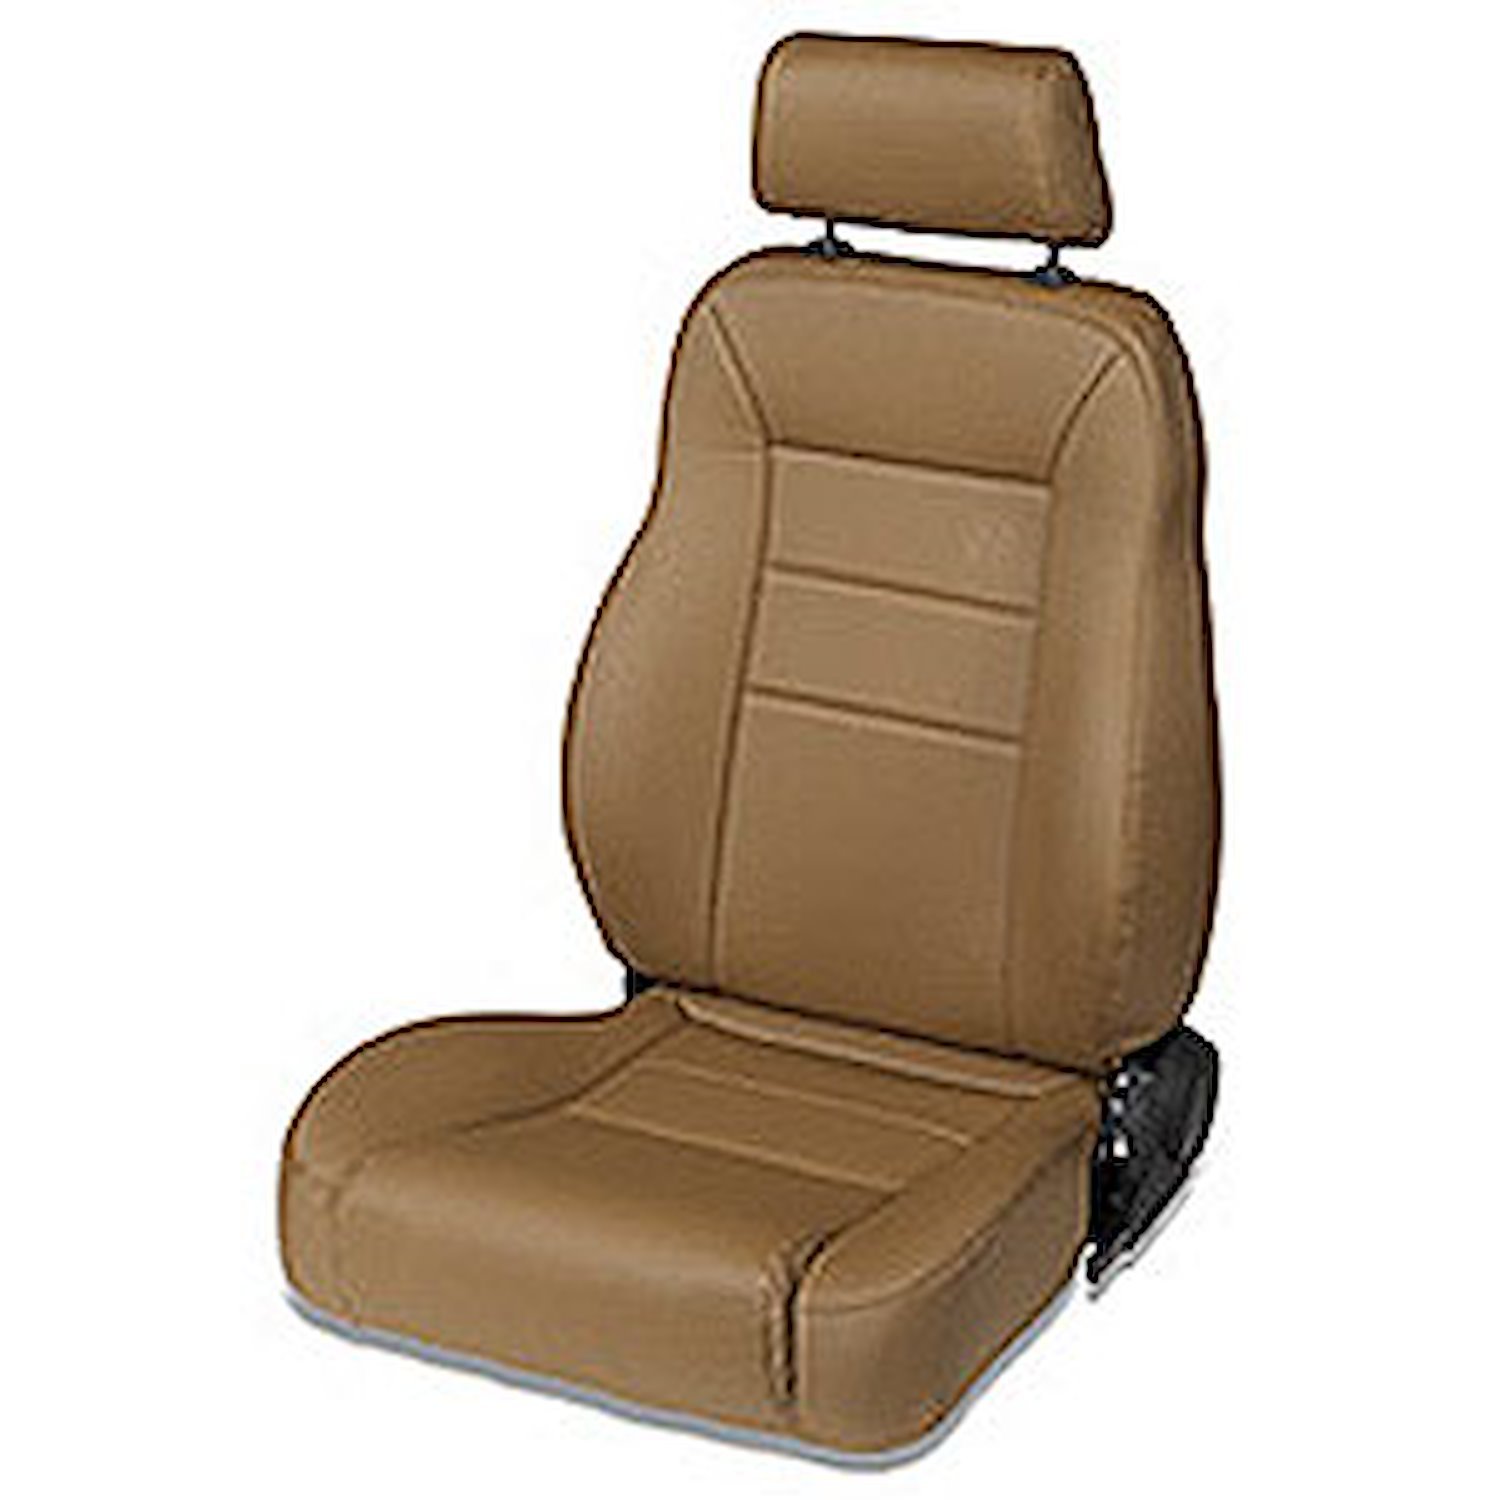 Trailmax II Pro Seat, Spice, Front, High-Back, Vinyl, Premium Bucket, Driver side,